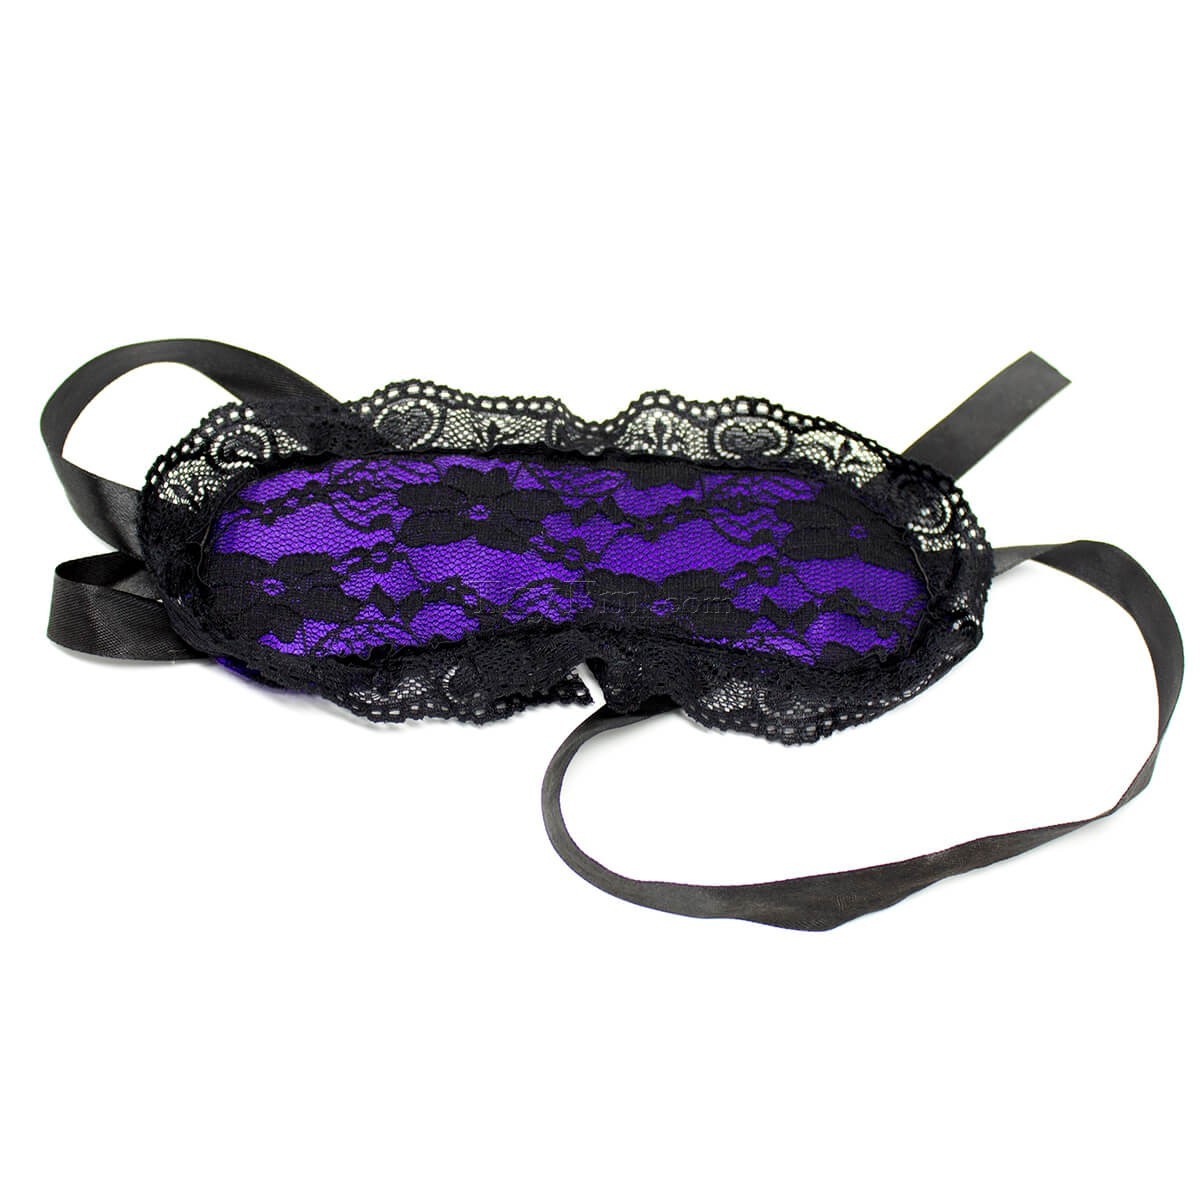 2-lace-blindfold-handcuffs-set-purple10.jpg